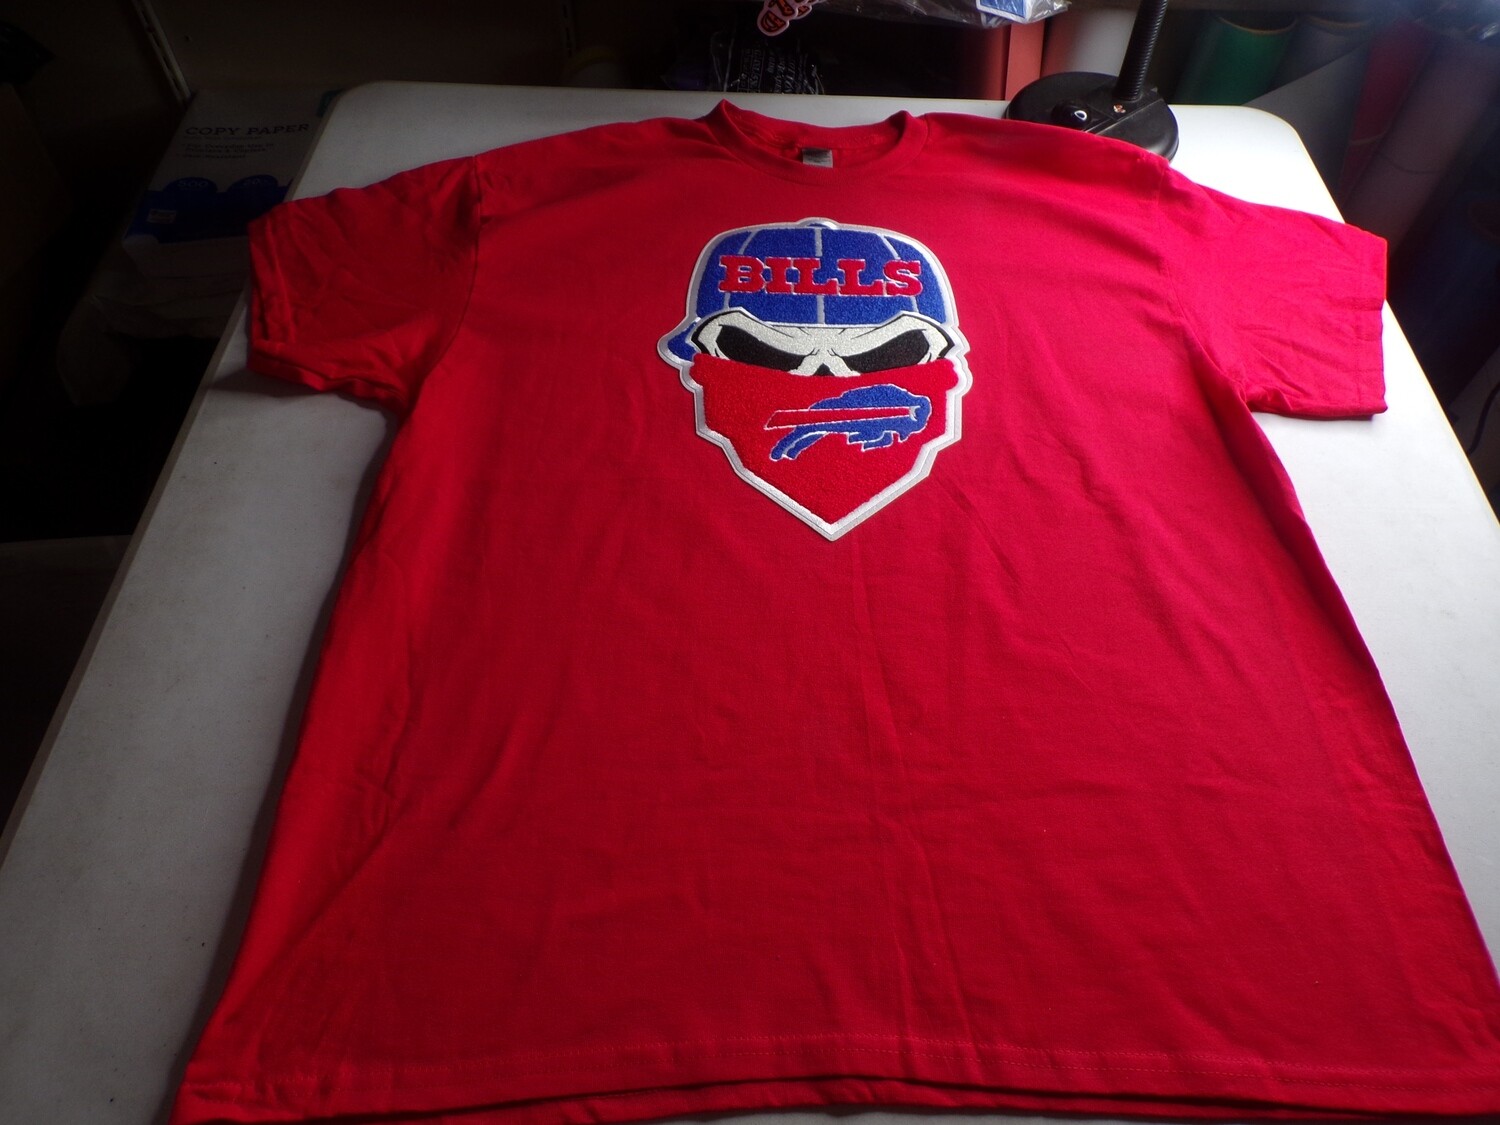 Exclusive Bills Mafia Stitch Work Iron On Patch 12x5 inch Tee Shirt (Red)